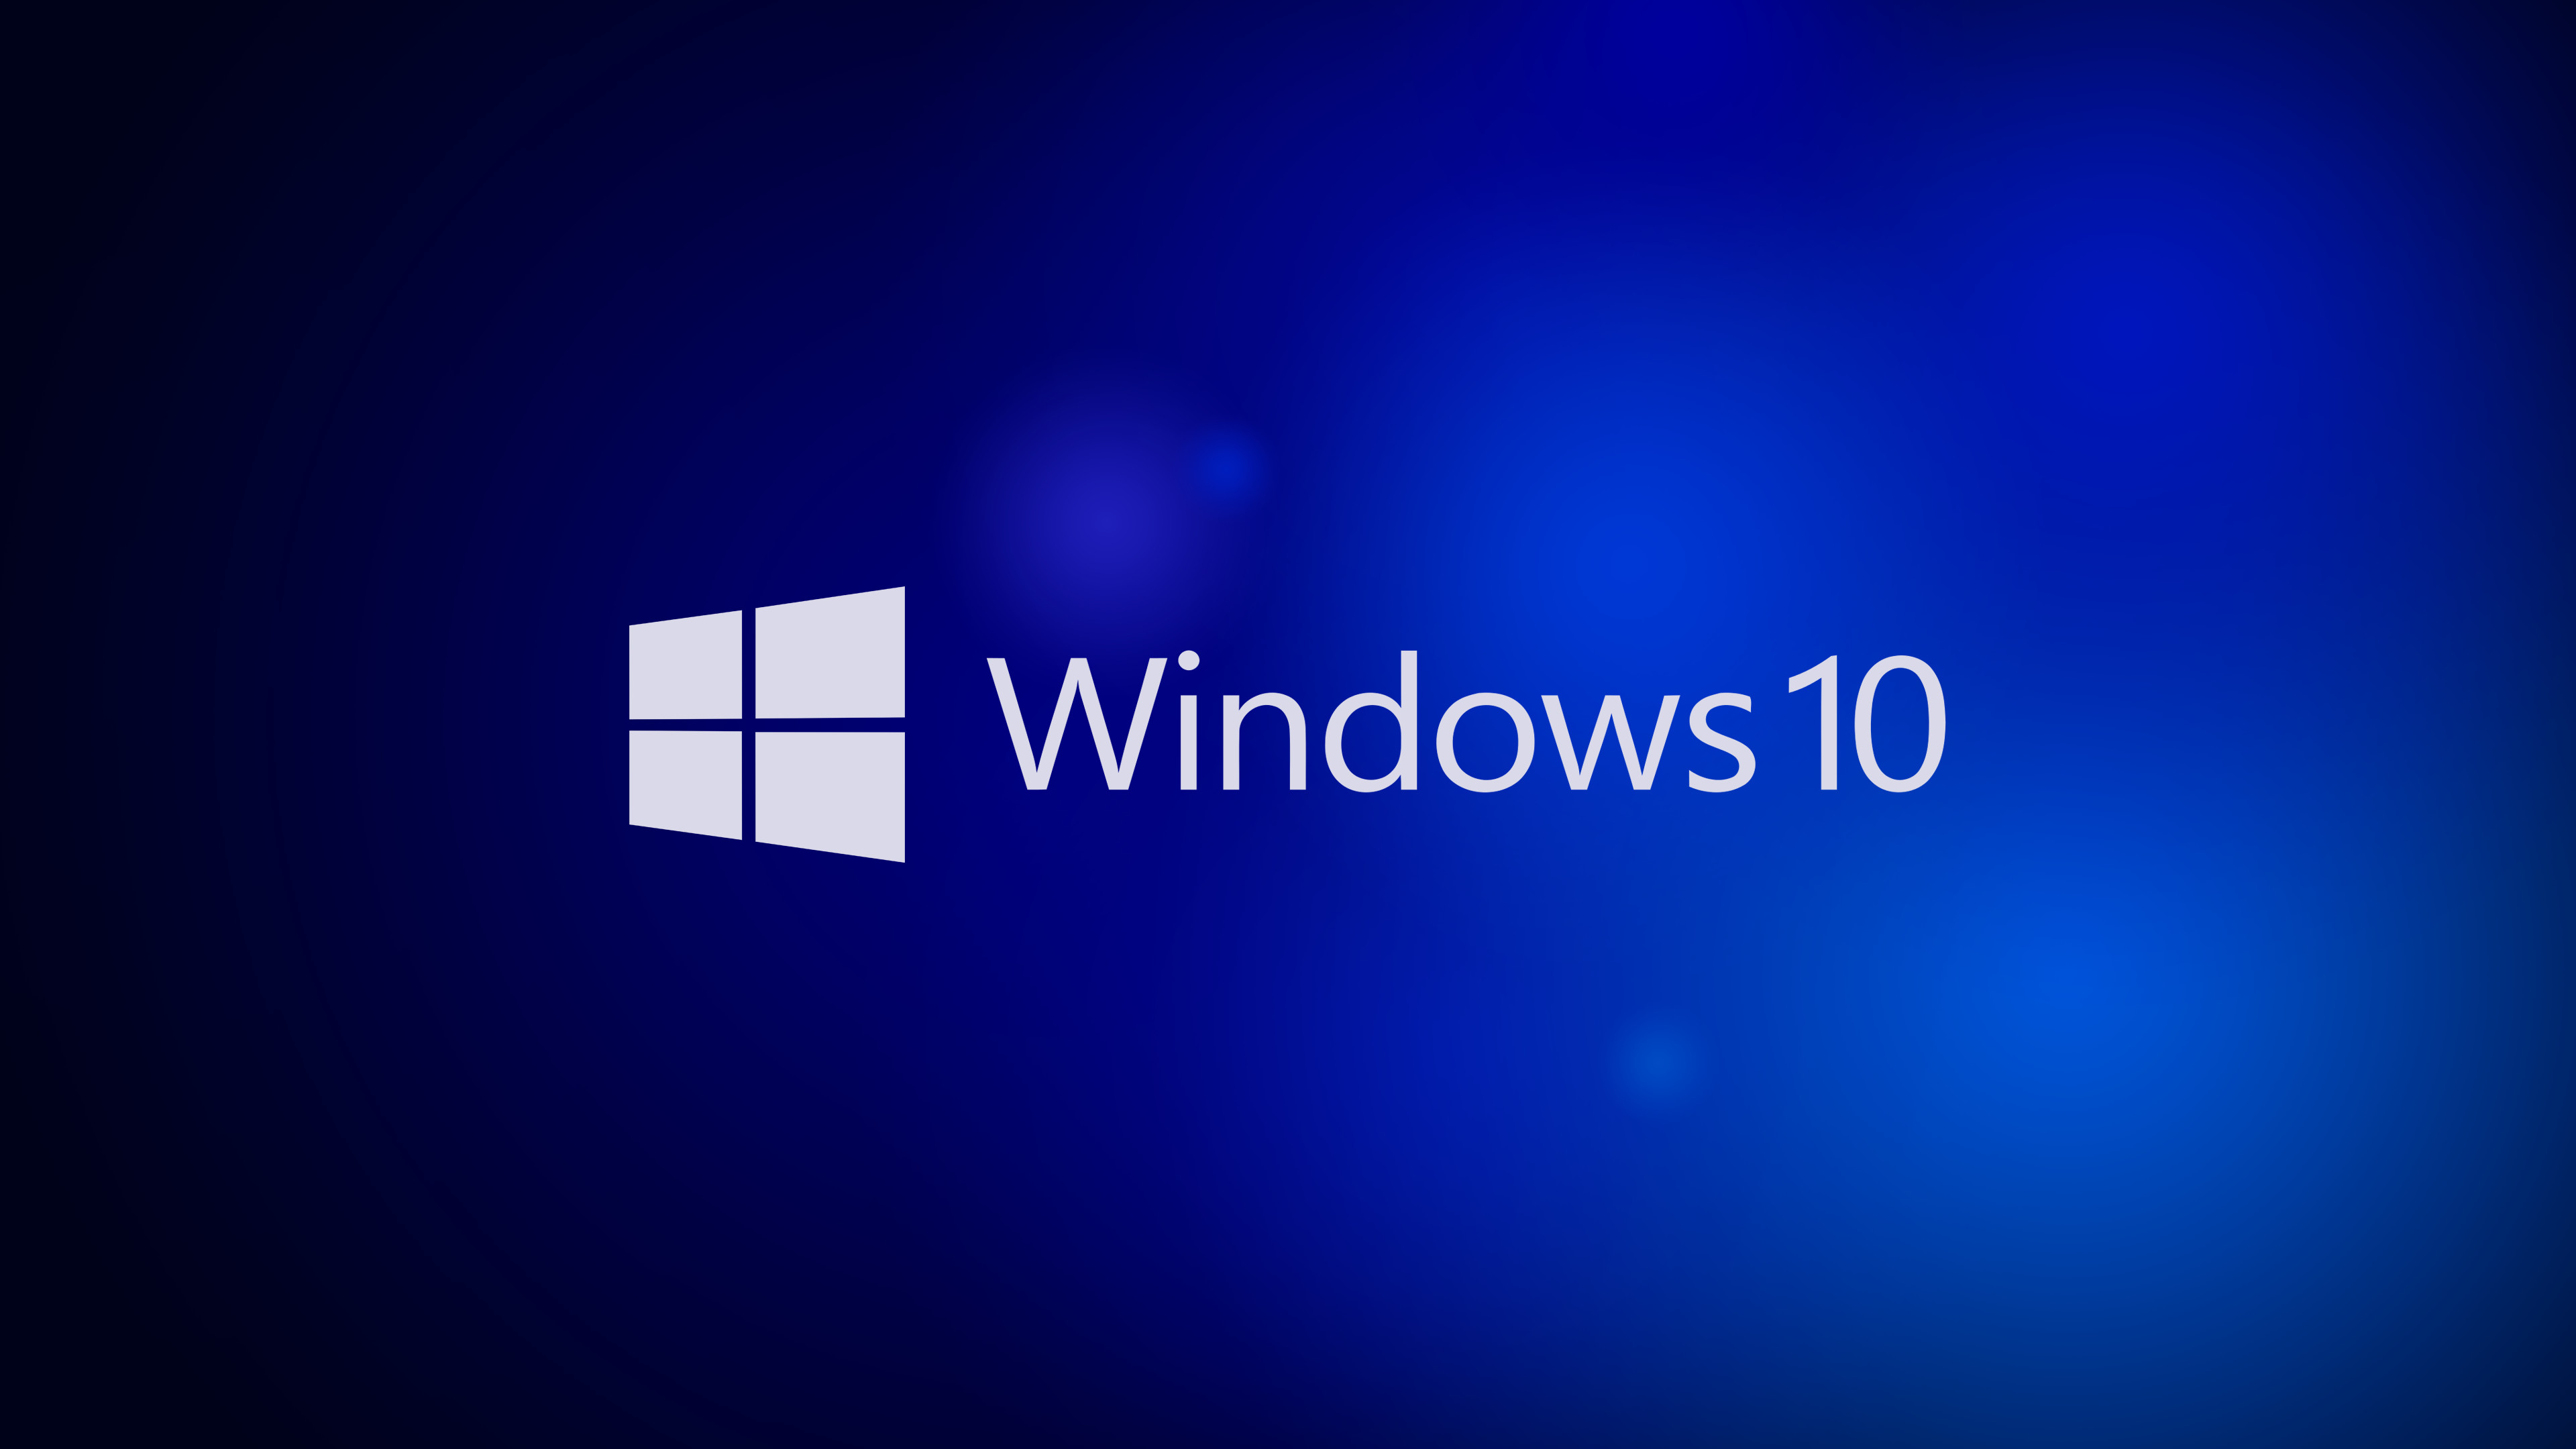 Windows 10 3840X2160 Windows 10 4K Wallpaper For Pc / Одуванчик, hd, 4k